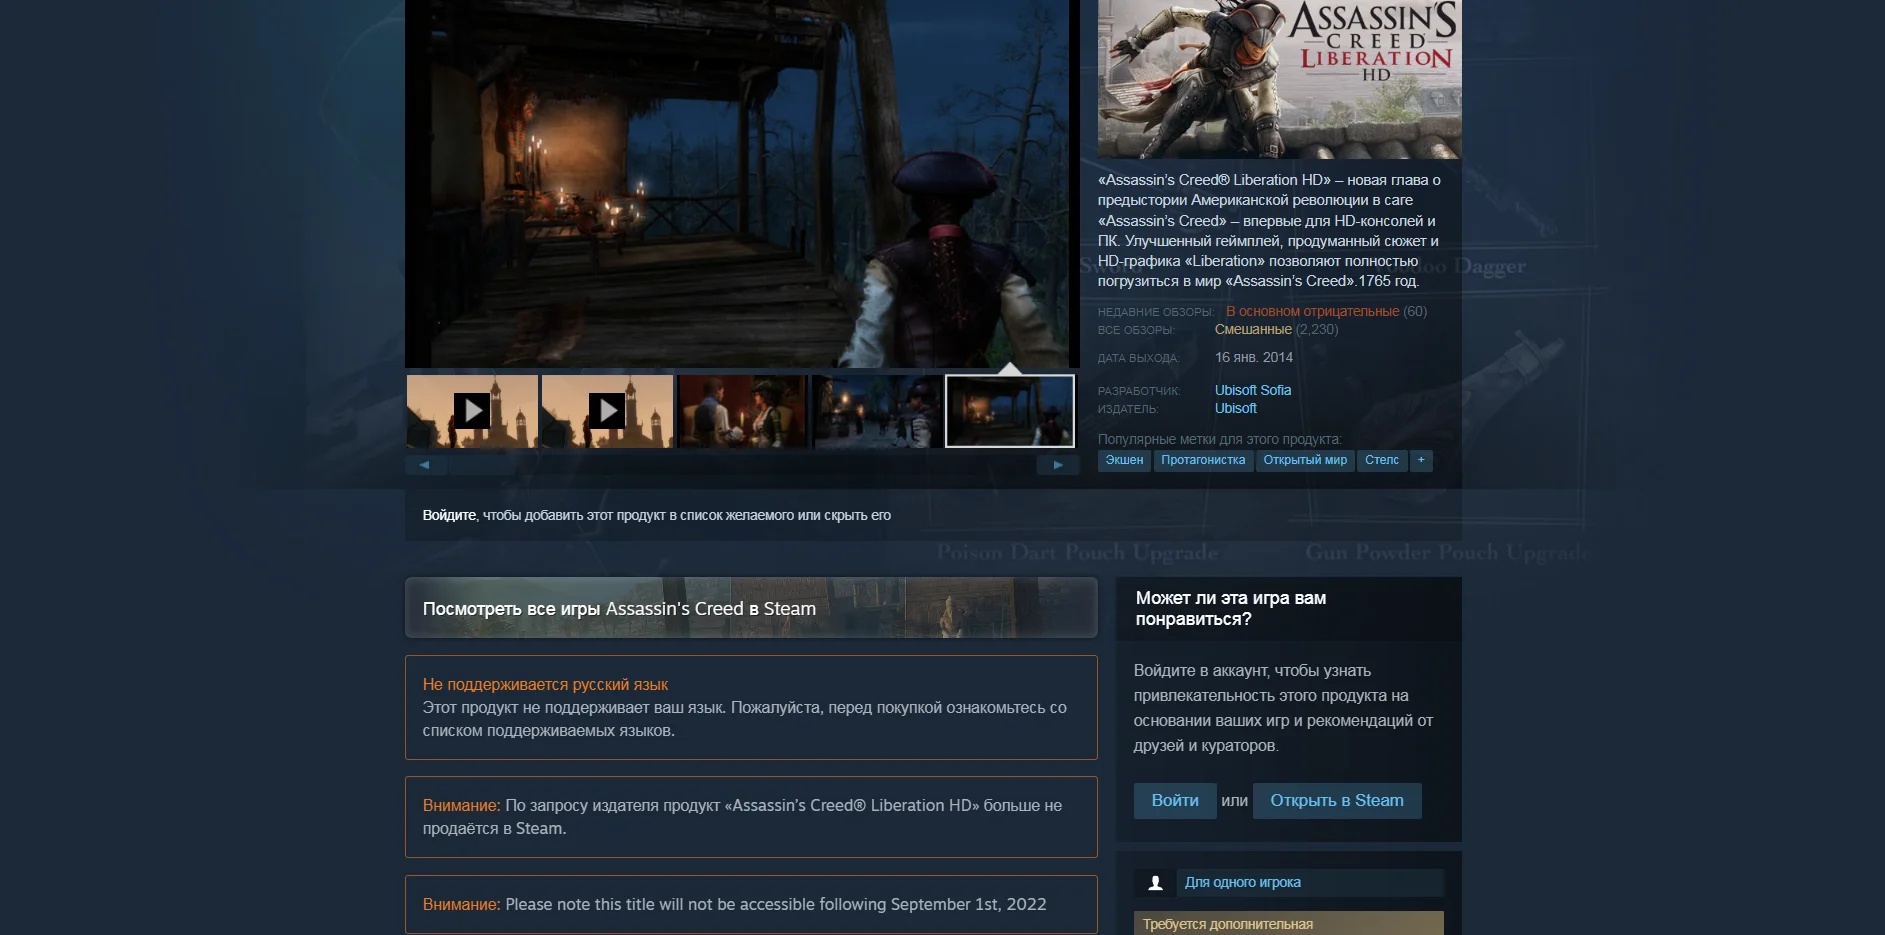 Steam-версия Assassin's Creed: Liberation HD станет недоступной после 1 сентября - фото 1